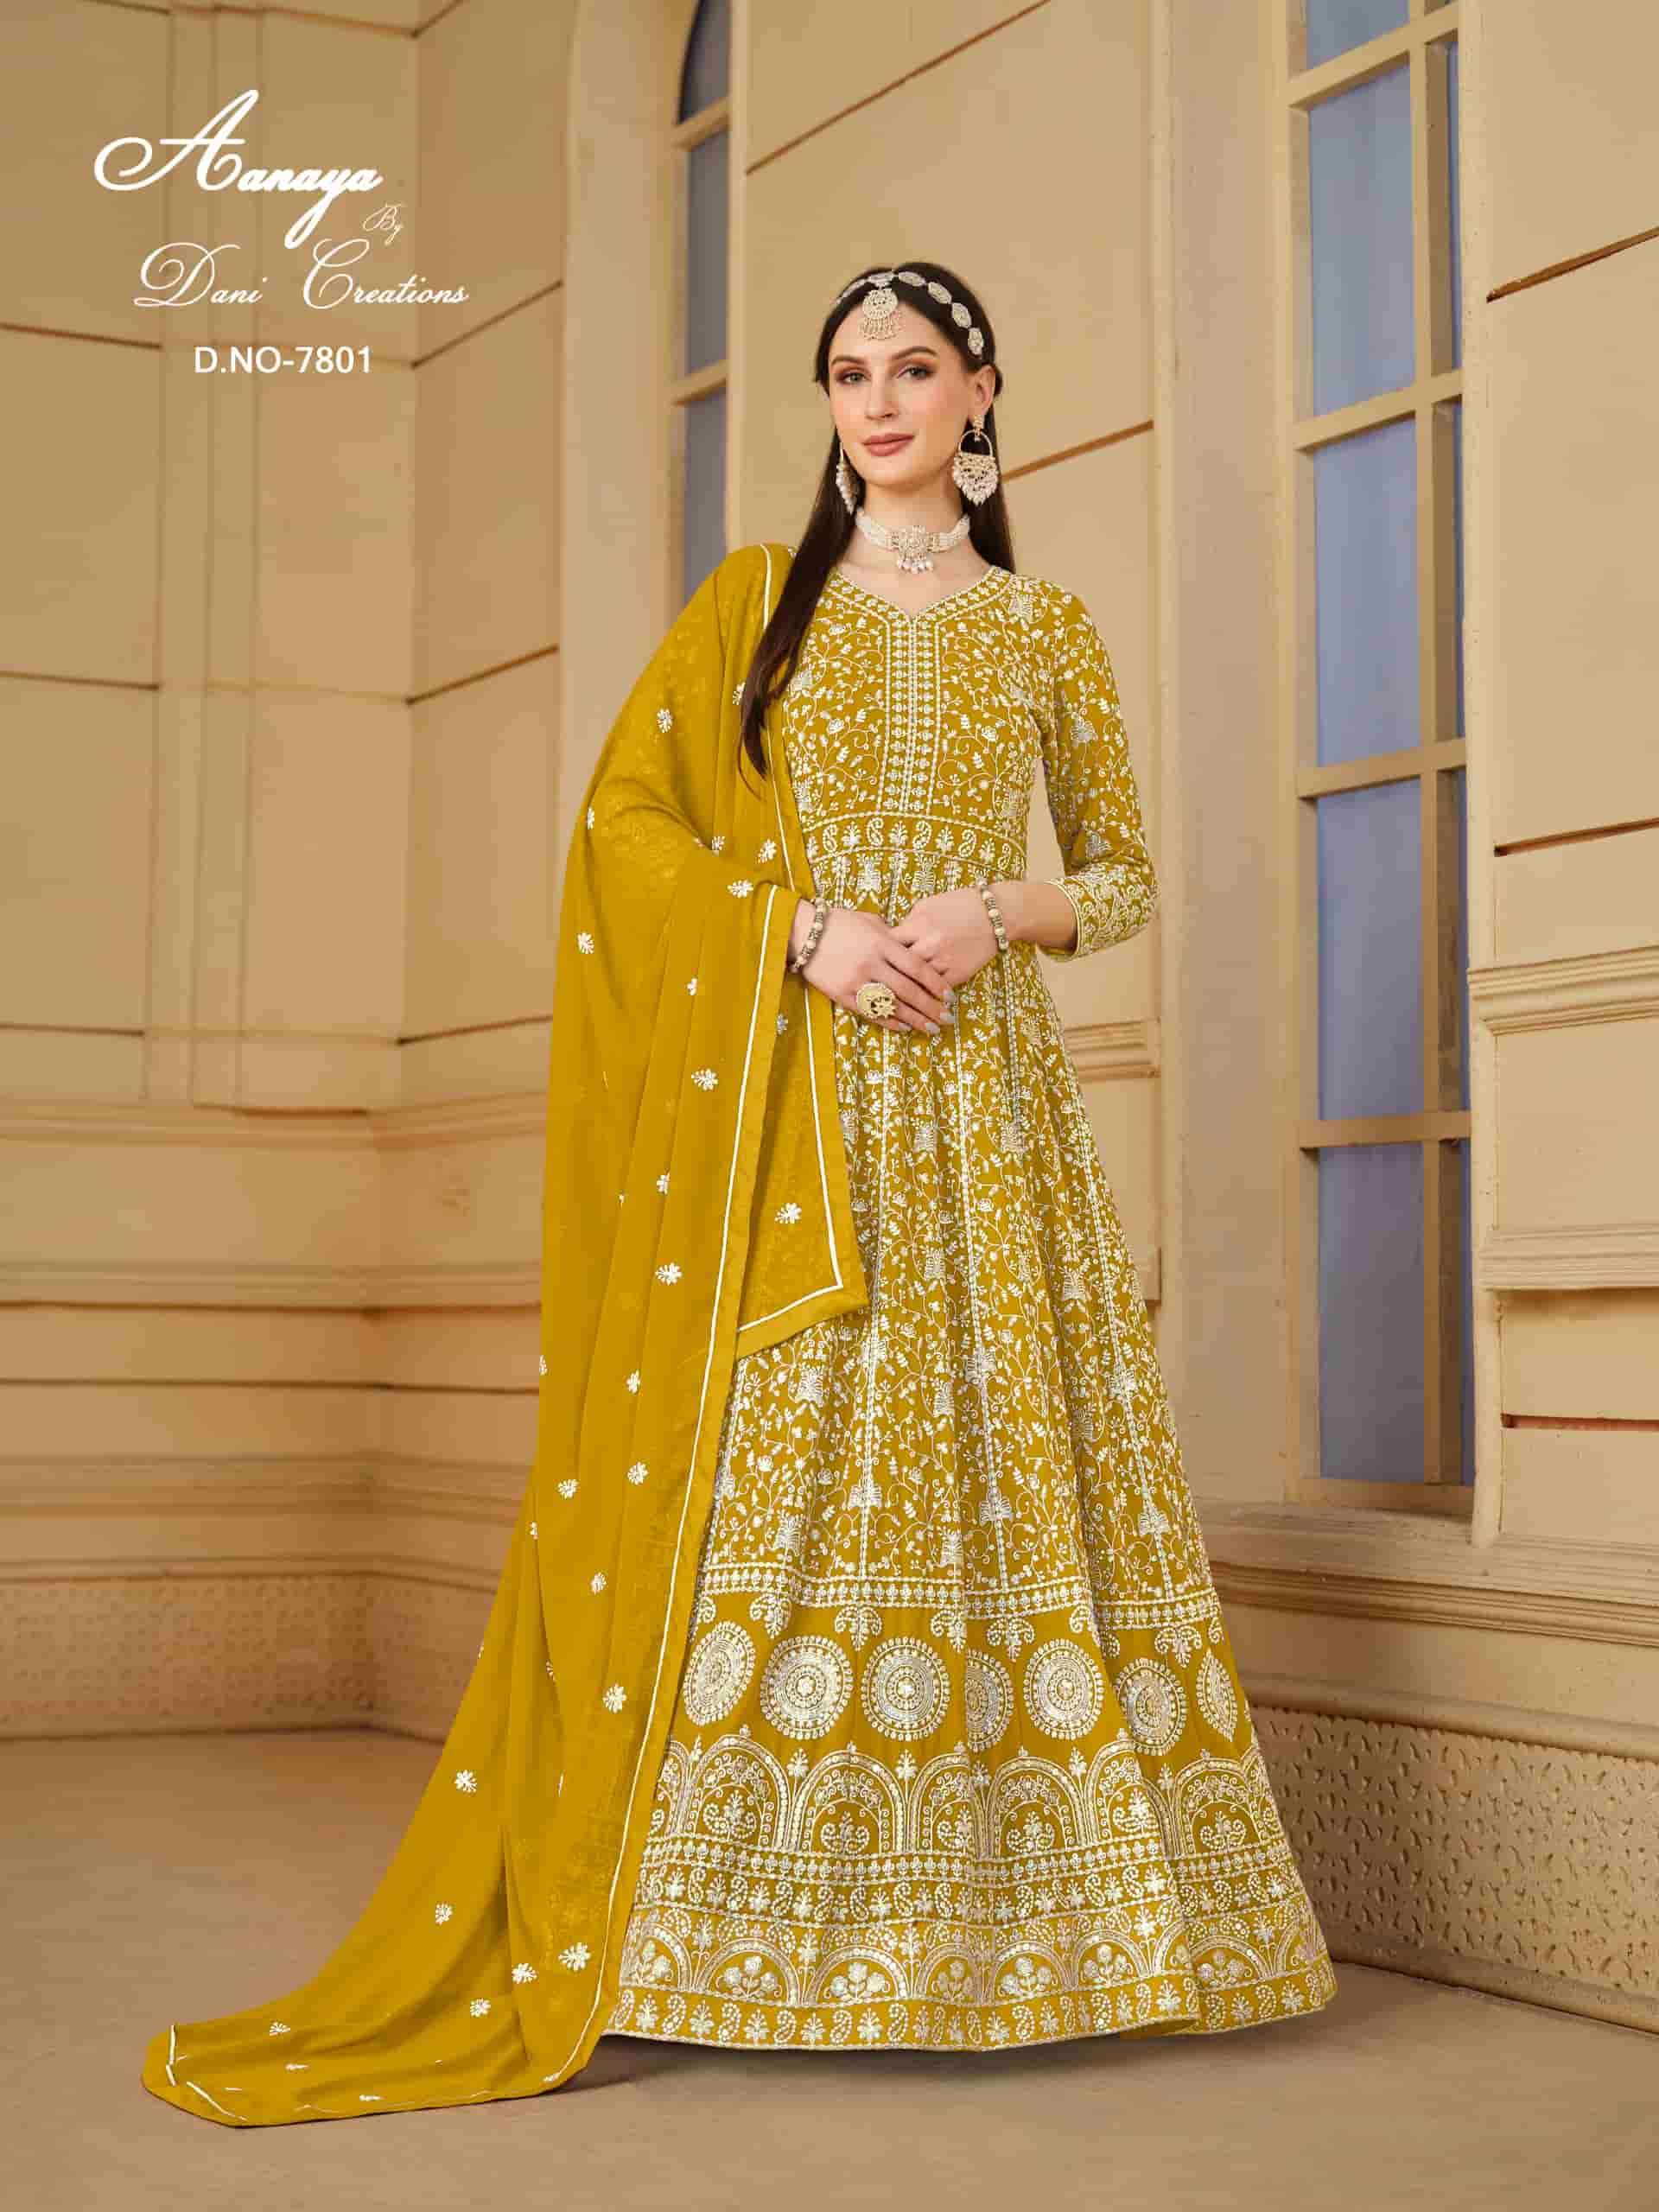 Aanaya Vol 178 latest Heavy Designer New Collection Dress Online Dealers